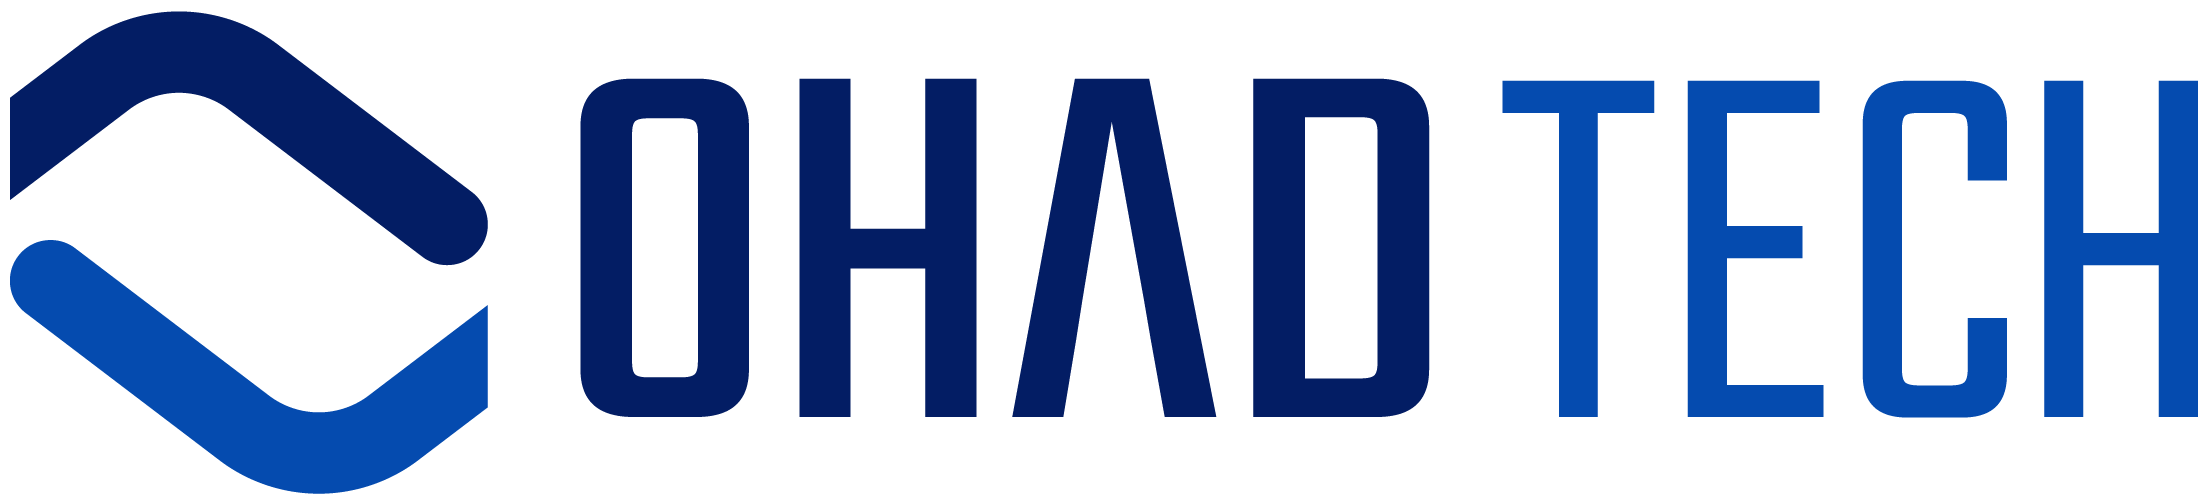 Ohad Tech Logo